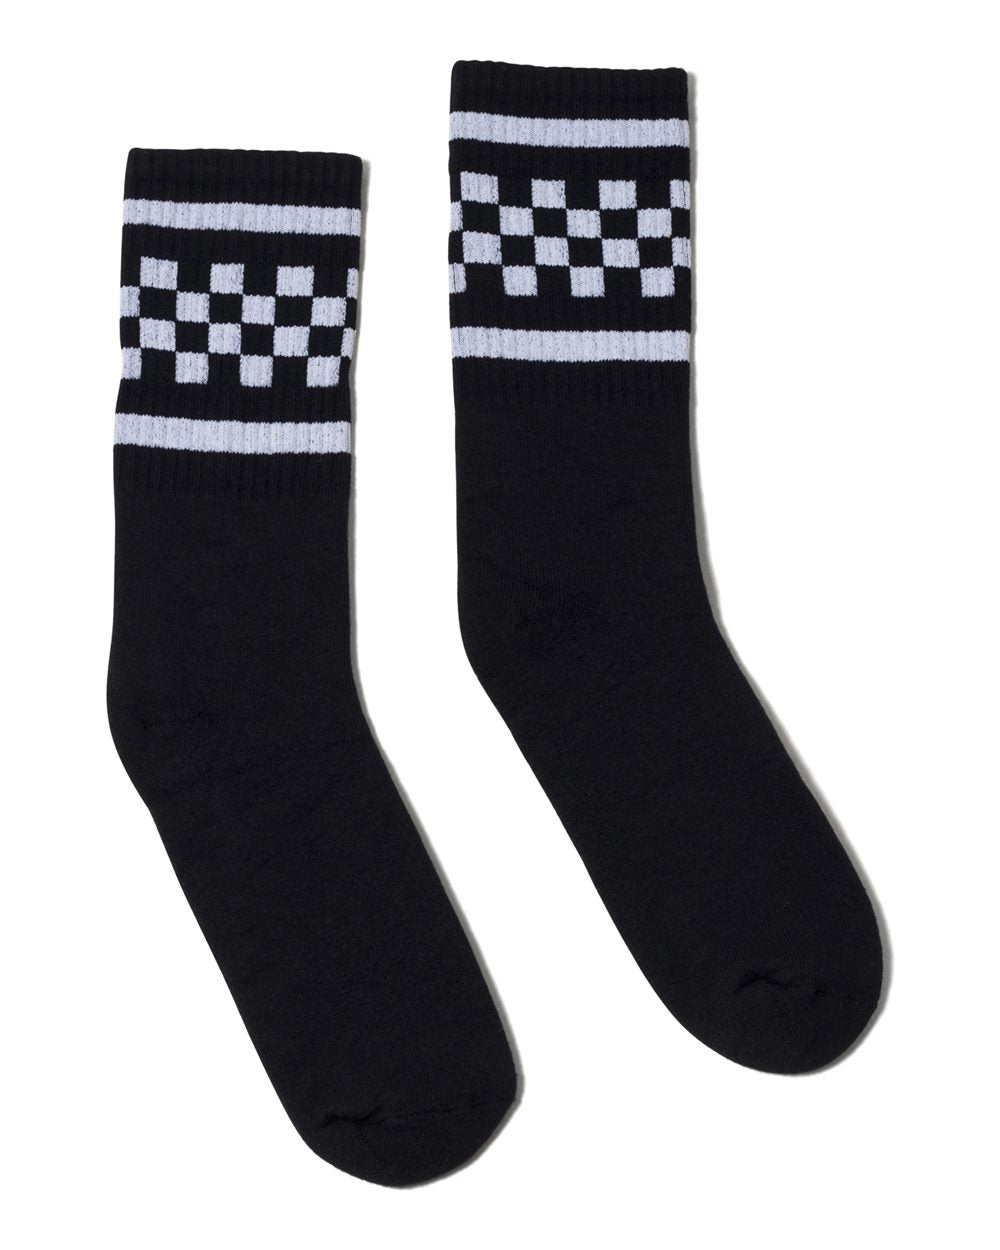 Socco Checkered Crew Socks – Black, Grey, White